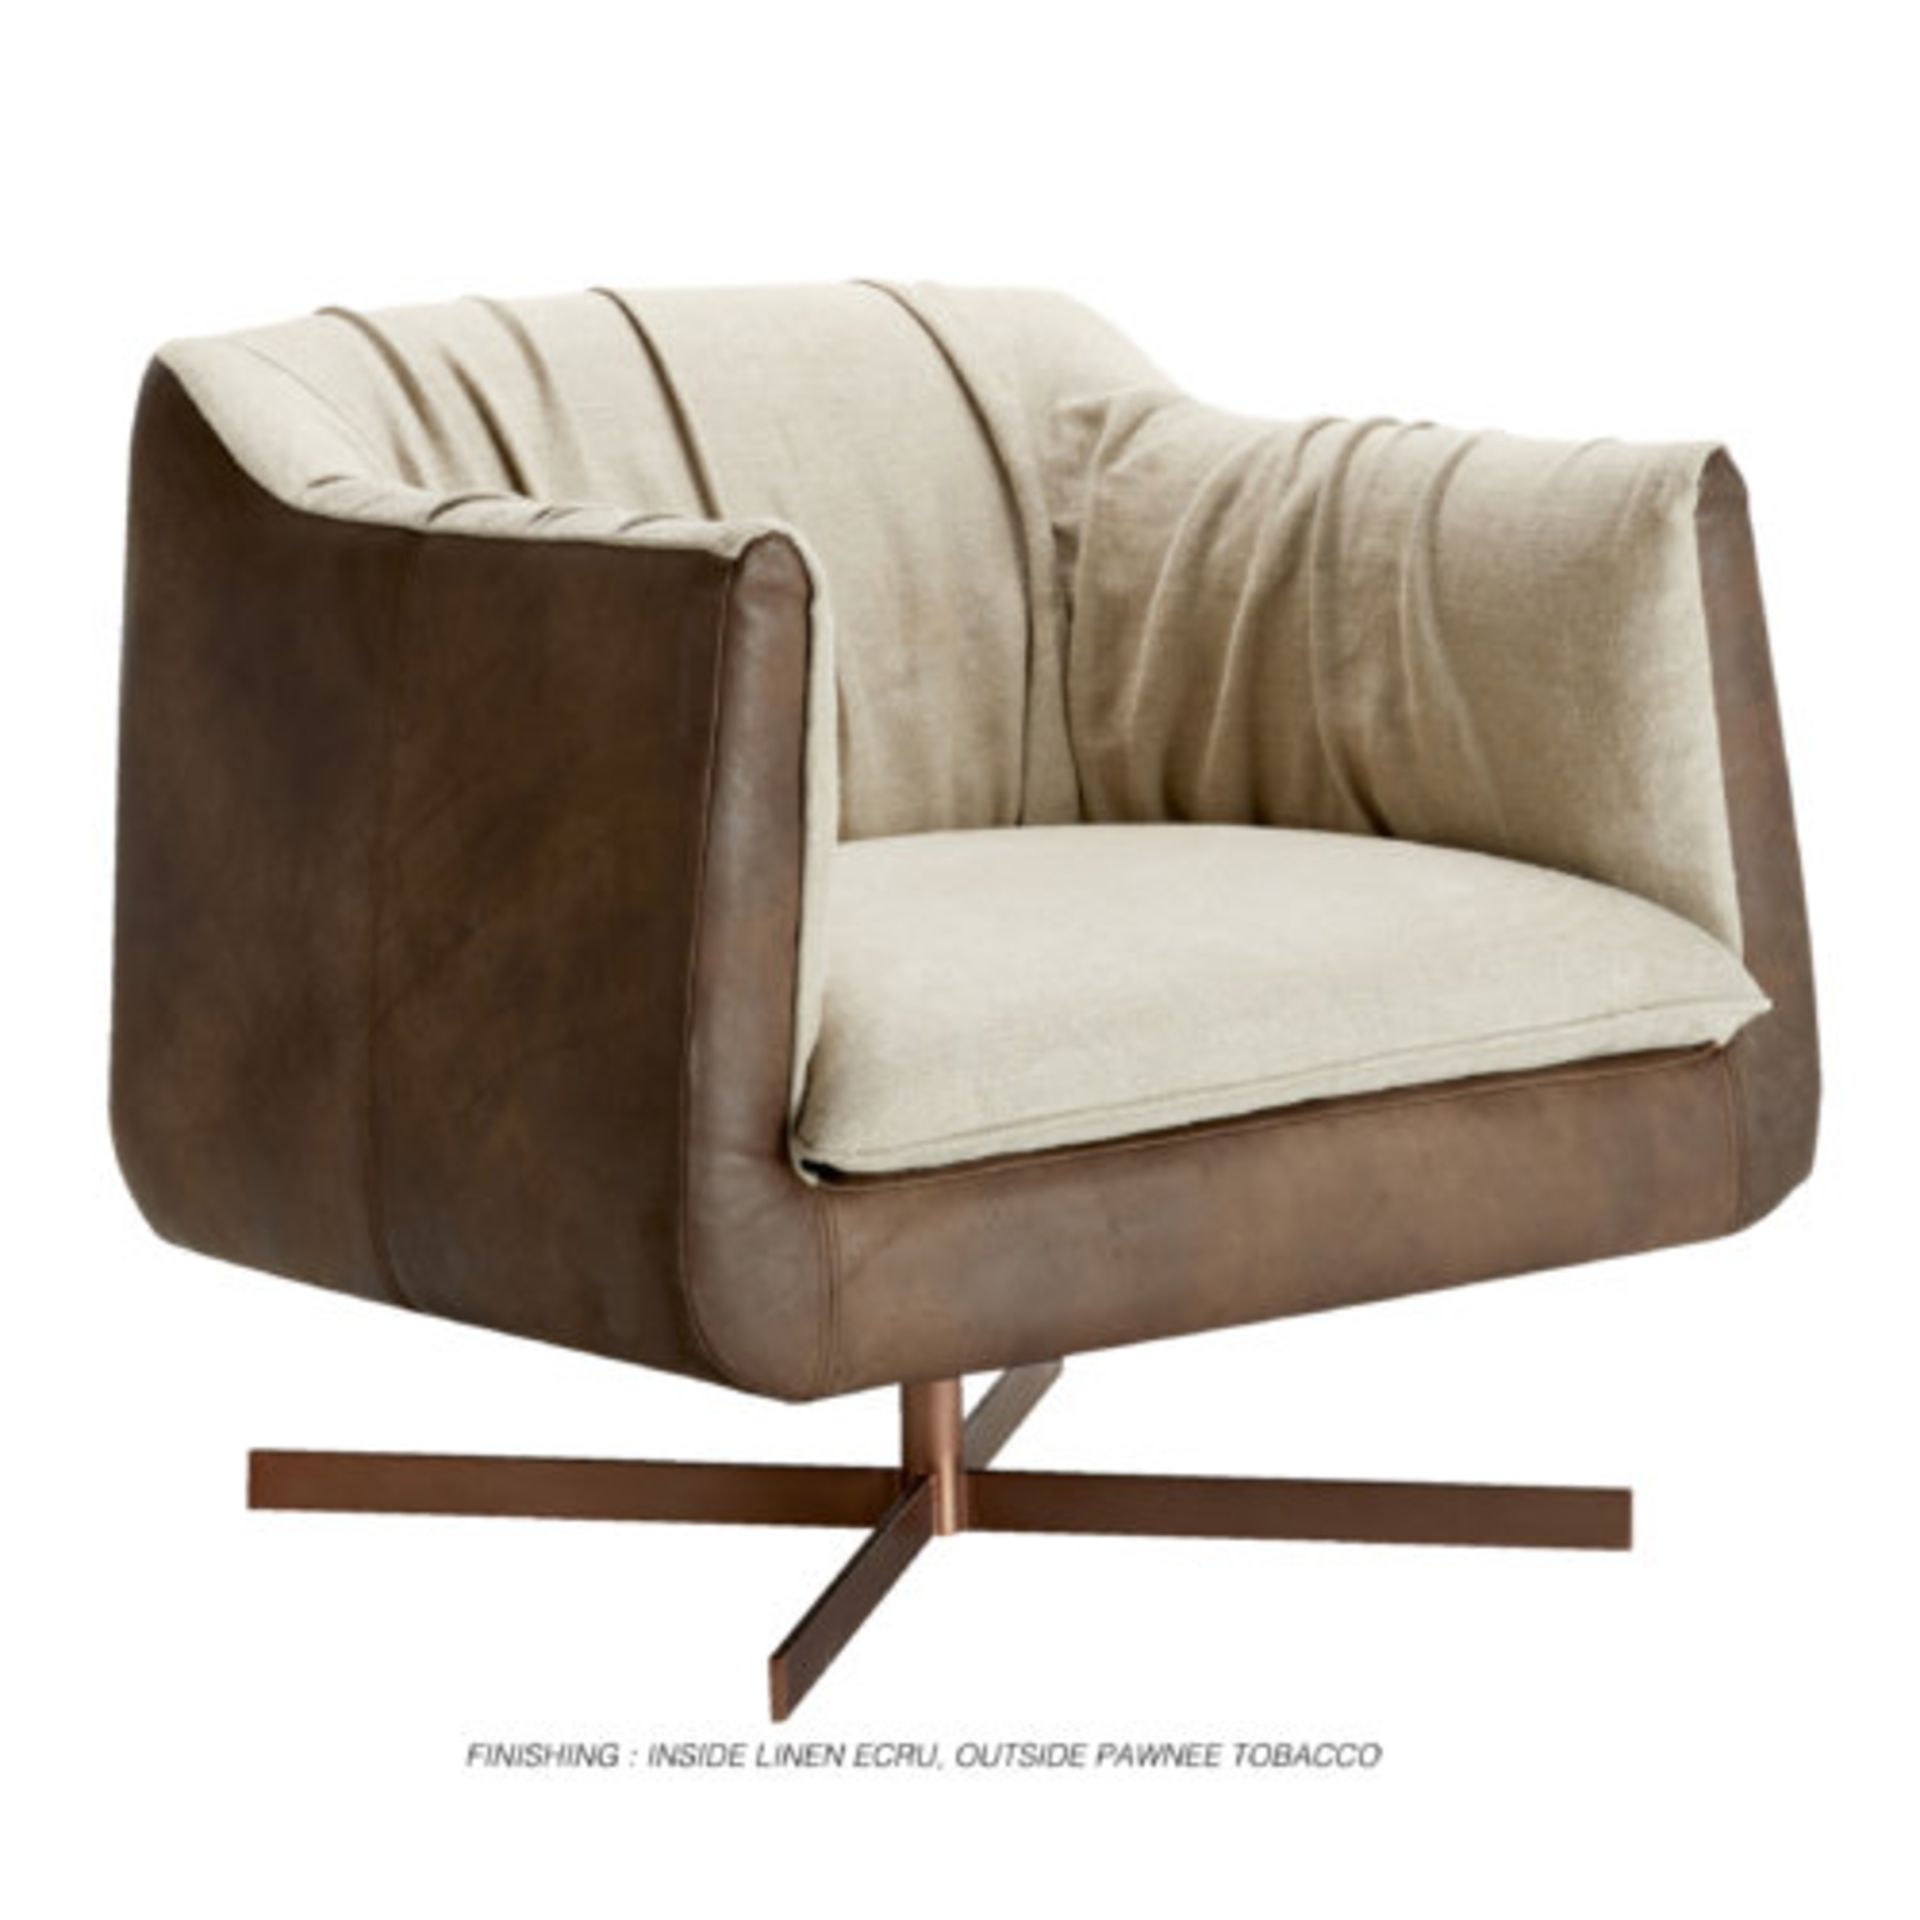 Bleu Nature F318 Waki Sofa 1 Seater Linen Ecru Inside Iroquois Chocolate Leather Outside Brushed - Image 2 of 2